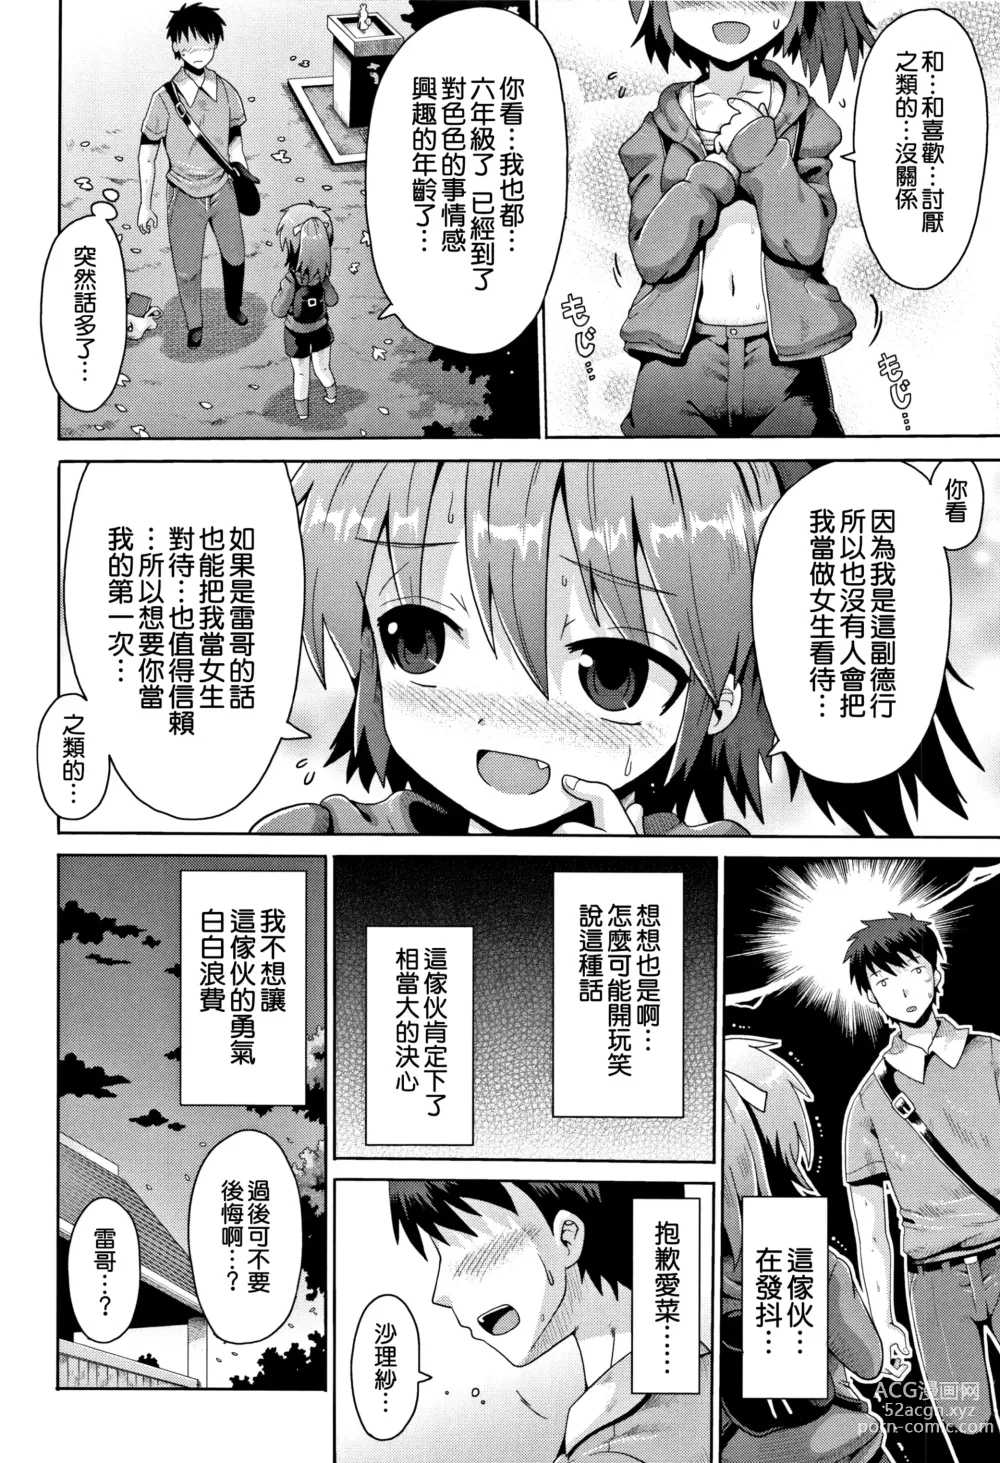 Page 11 of manga Trident 1 + 2 + 3